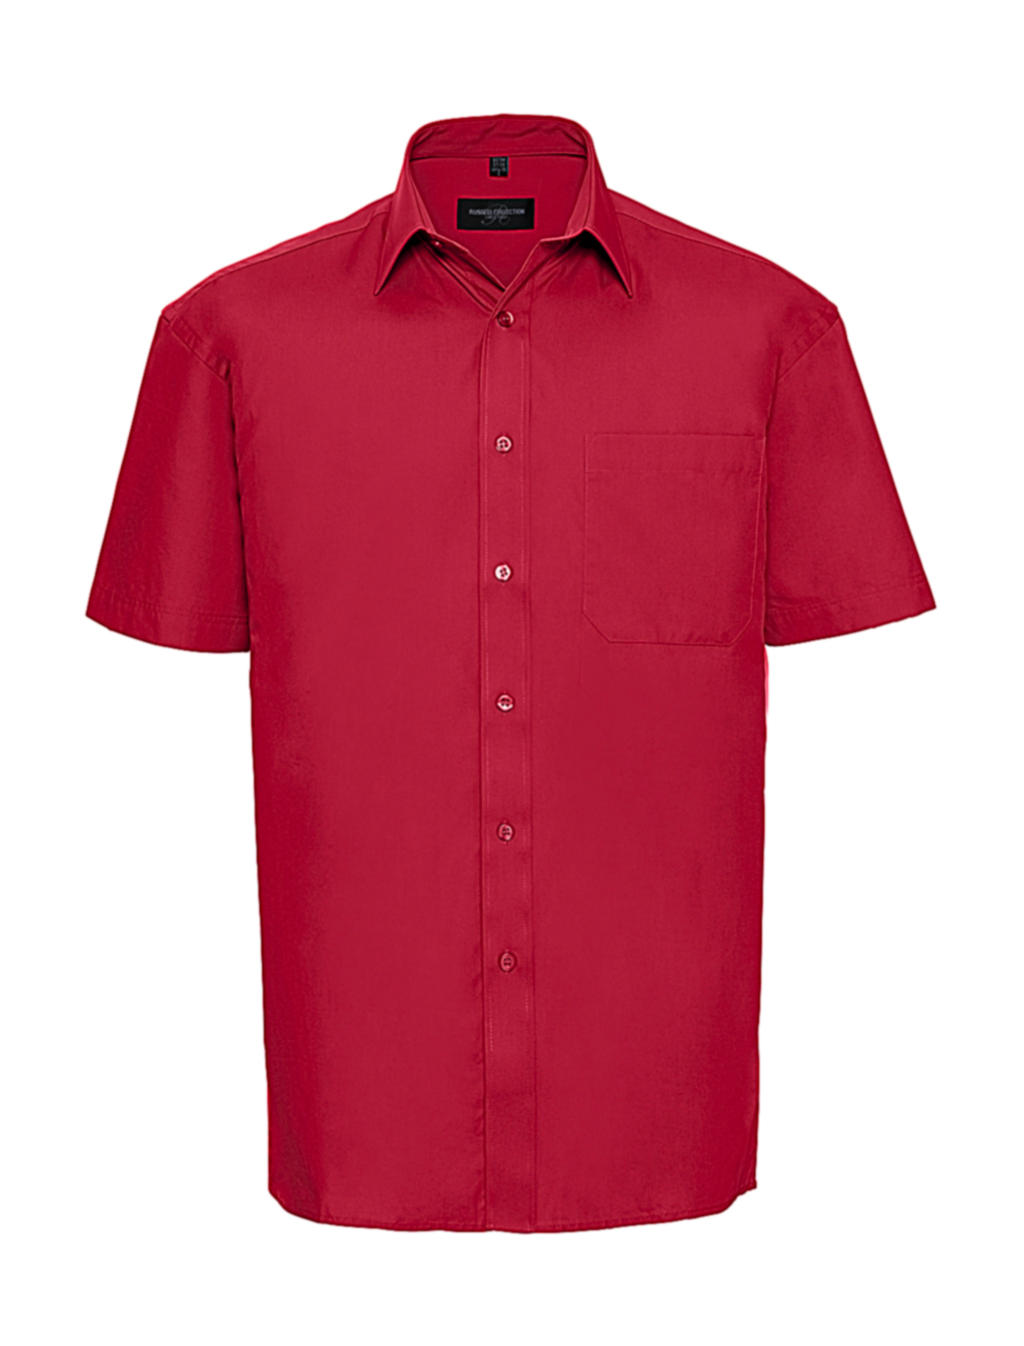  Cotton Poplin Shirt in Farbe Classic Red